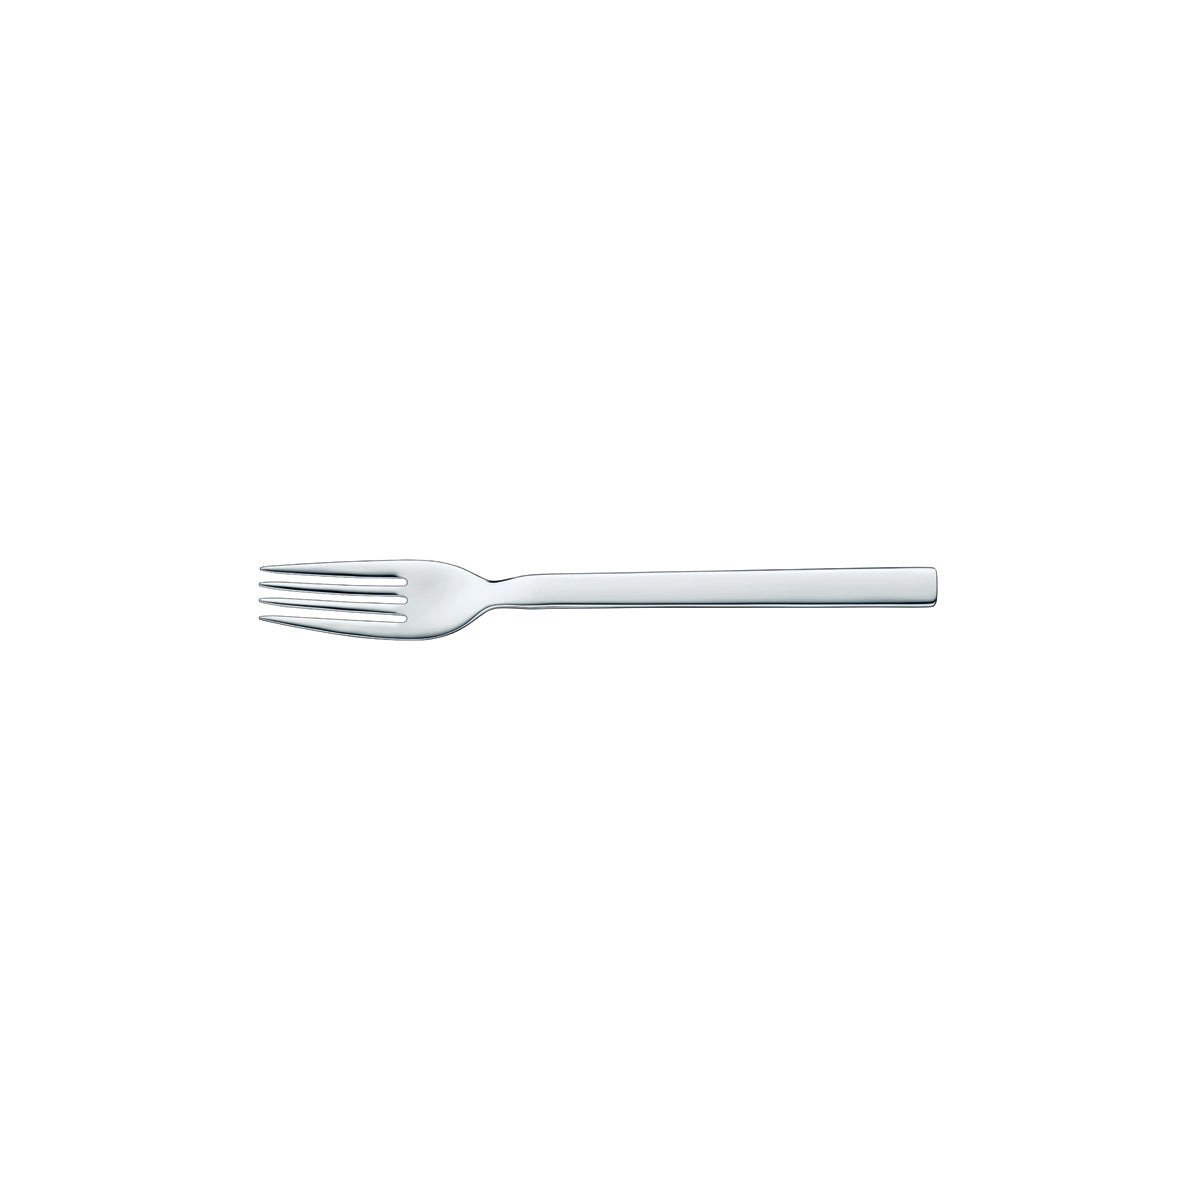 10.5302.6060 WMF Unic Table Fork Silverplated Tomkin Australia Hospitality Supplies